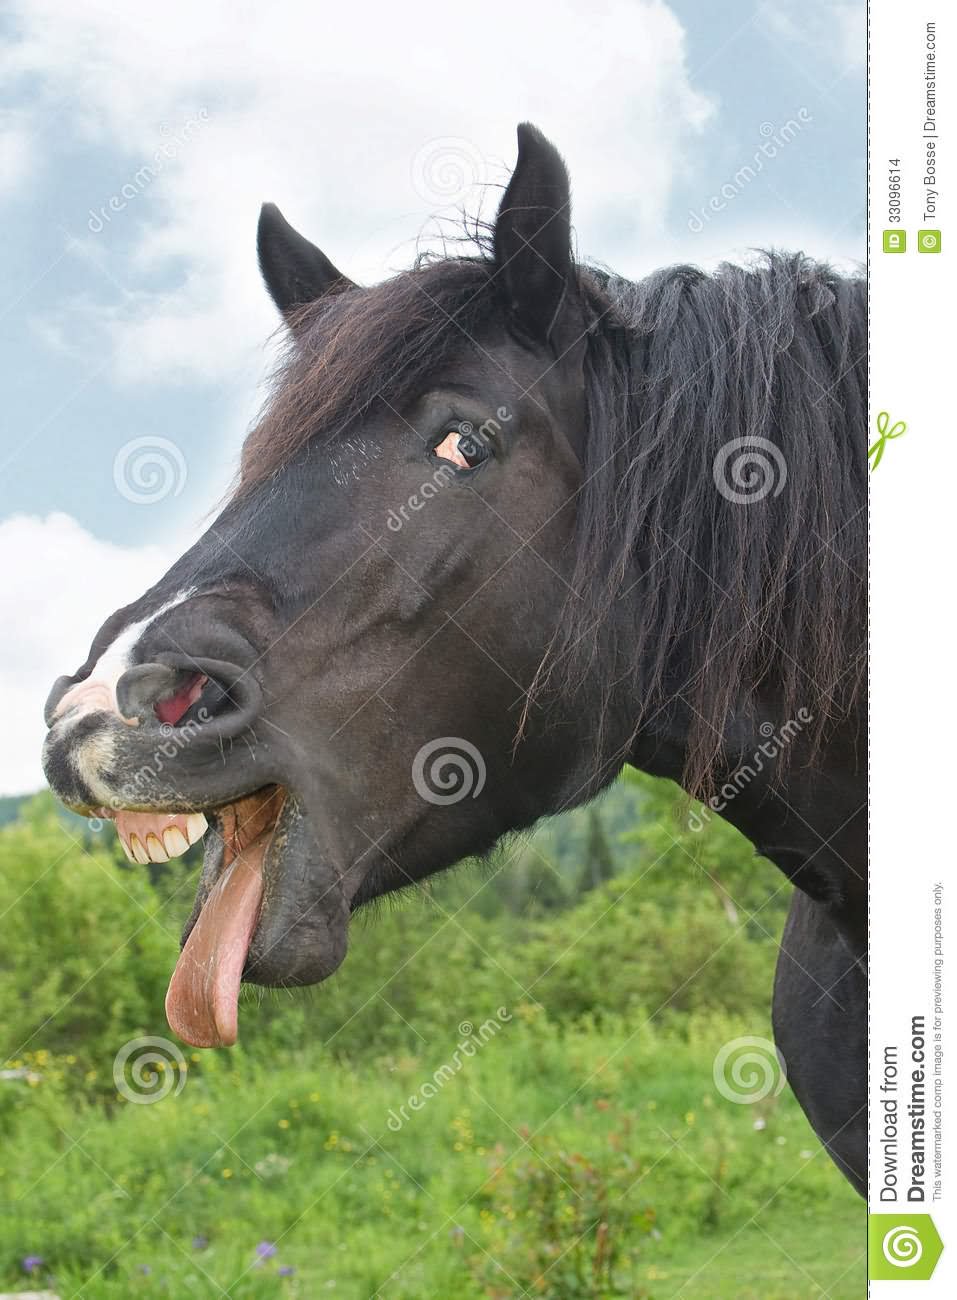 Percheron Draft Horse Making A Funny Face